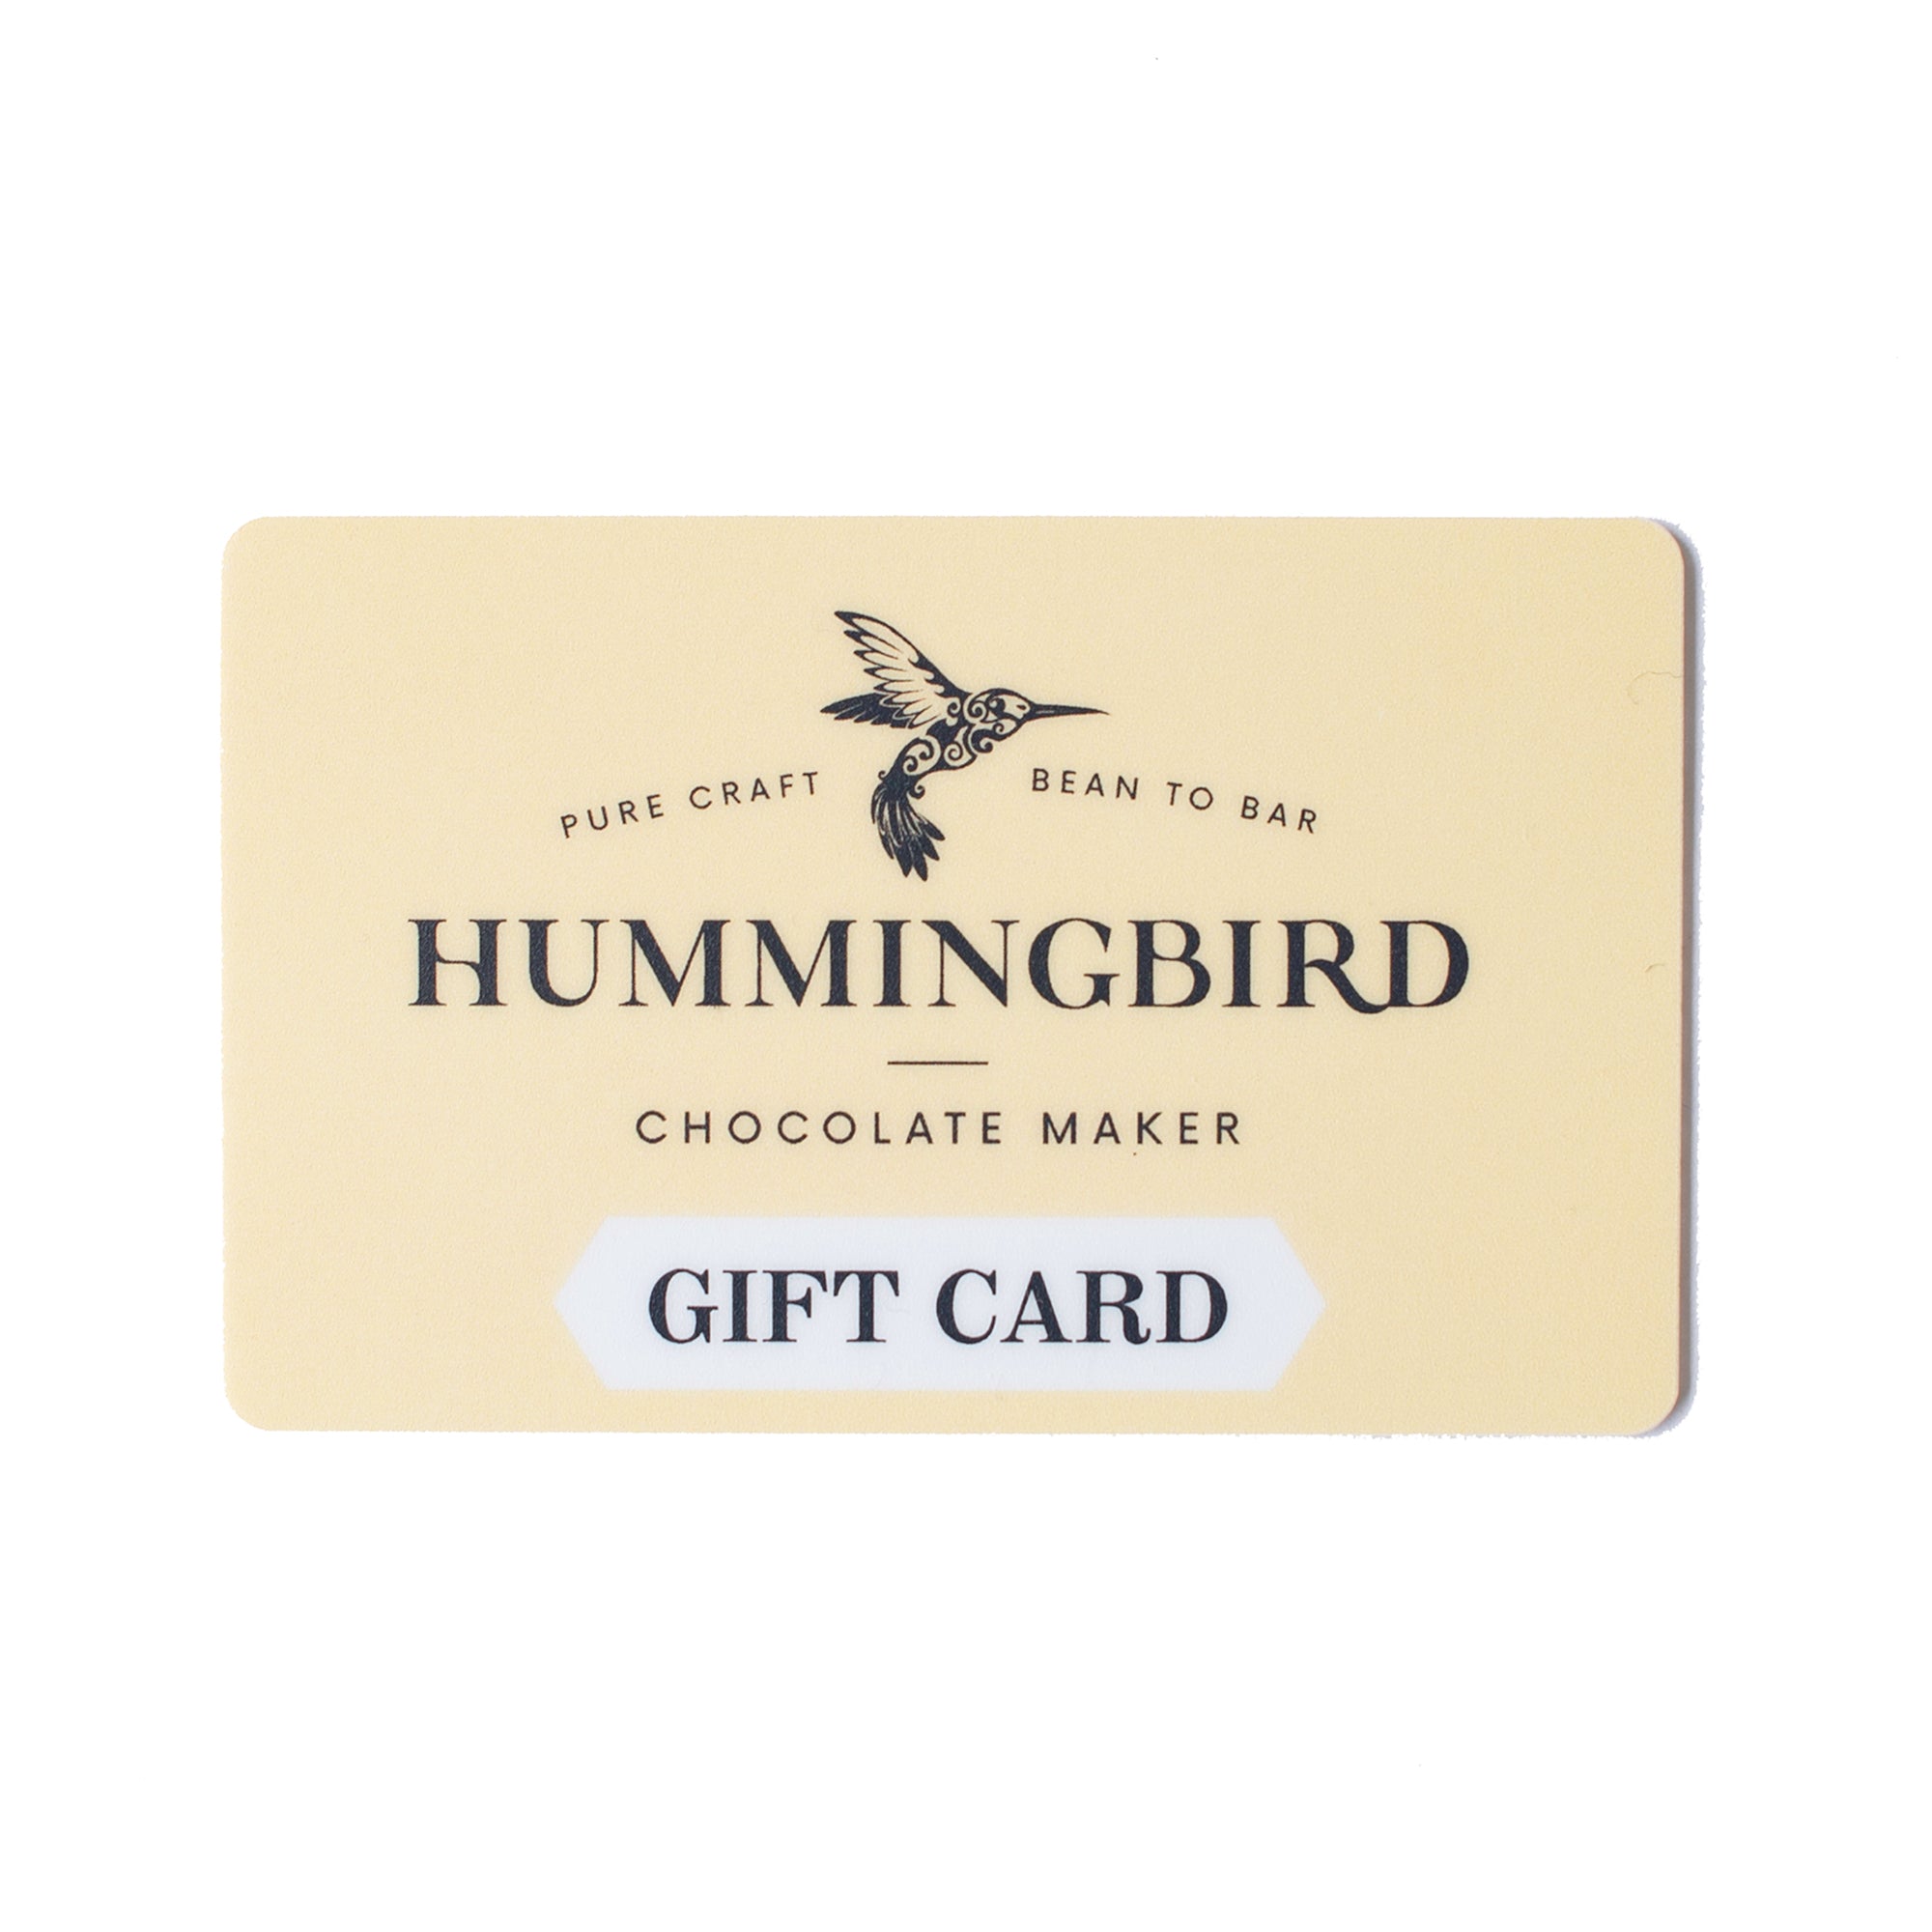 Hummingbird Chocolate Maker gift card